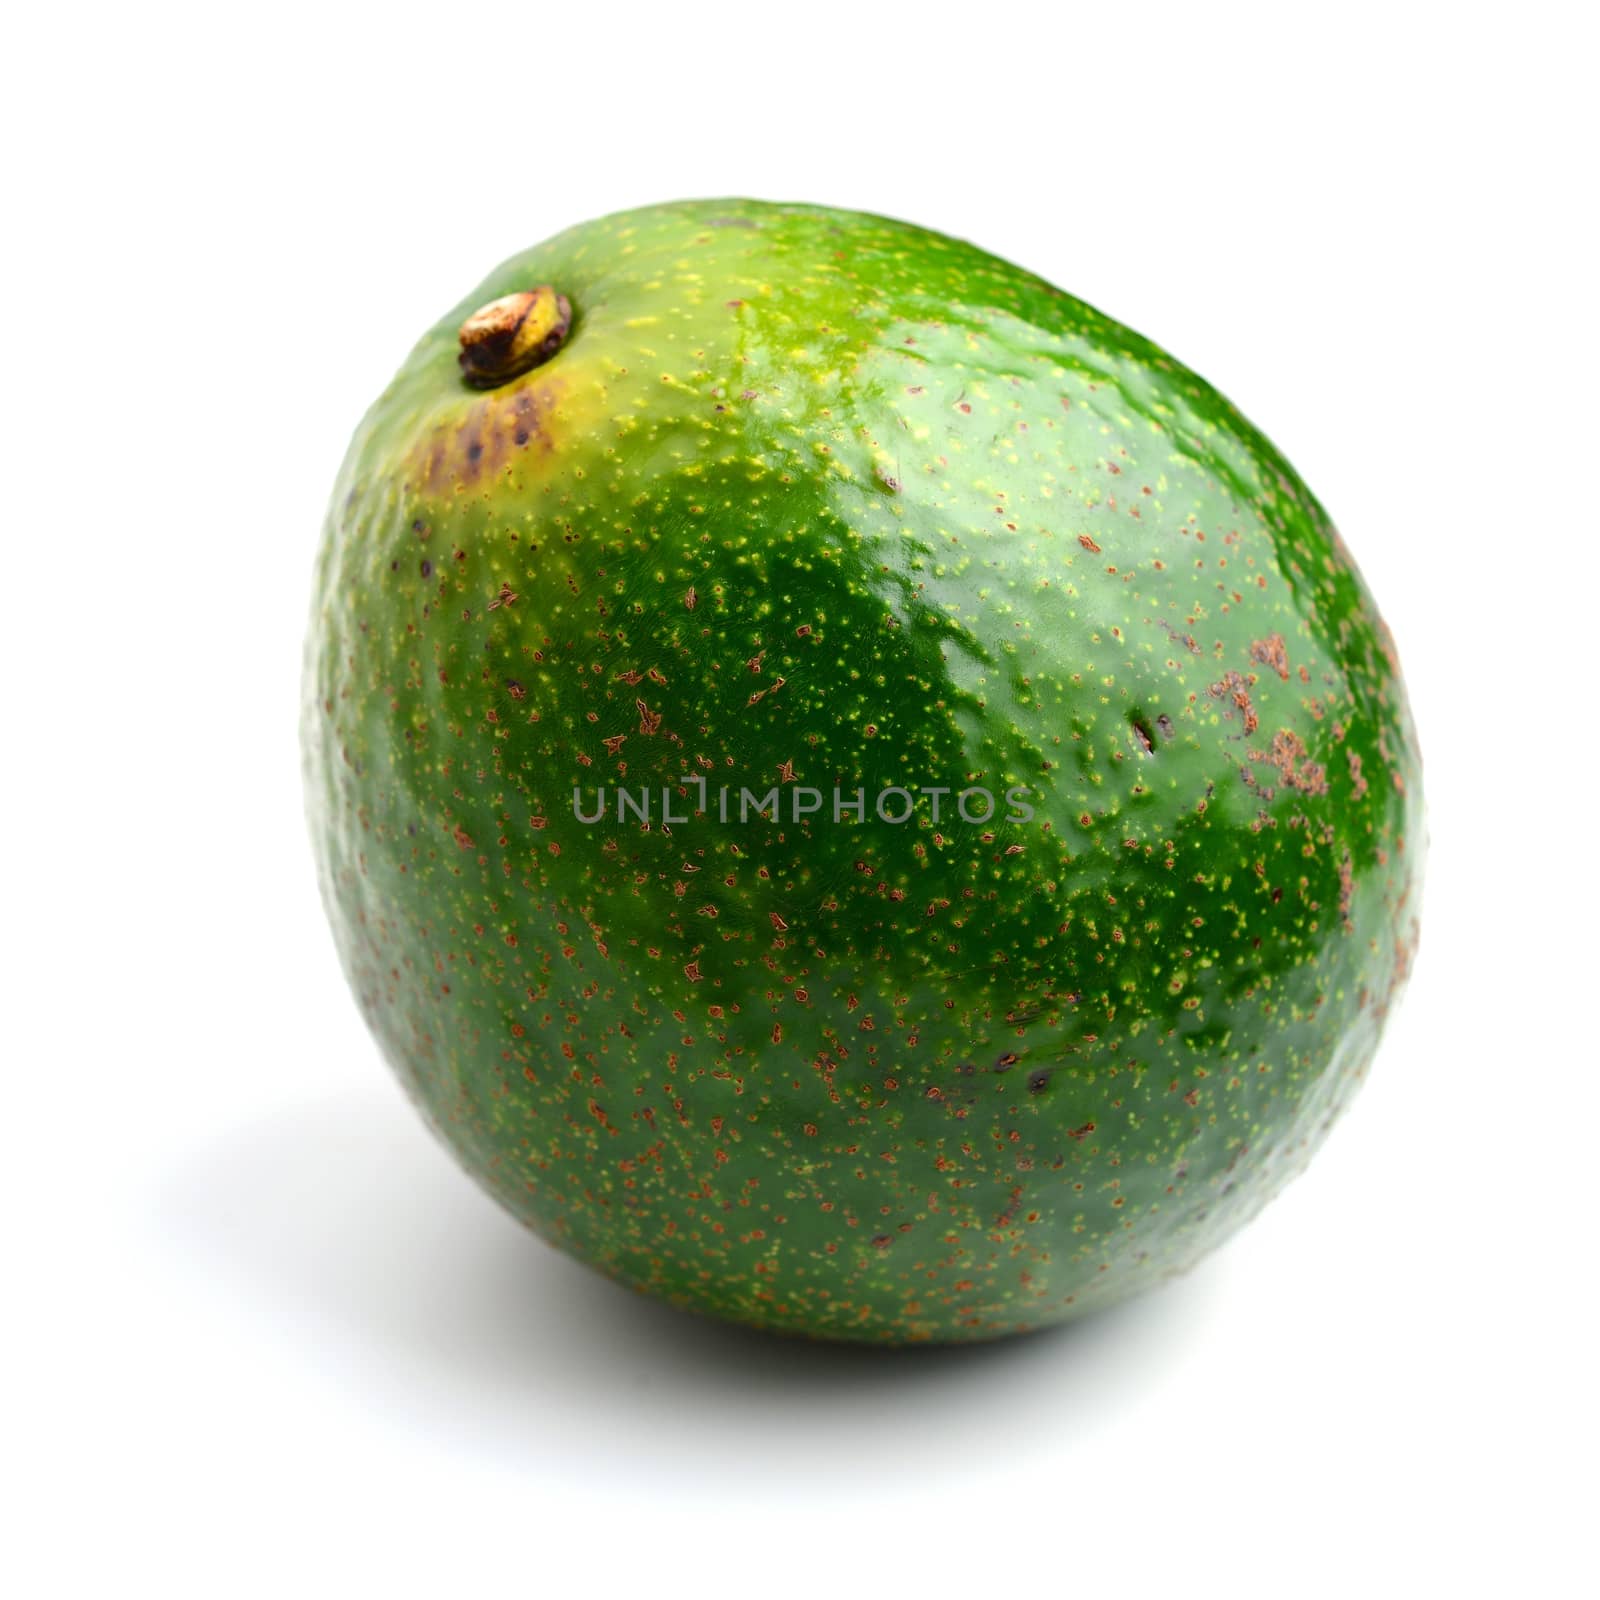 Avocado by antpkr